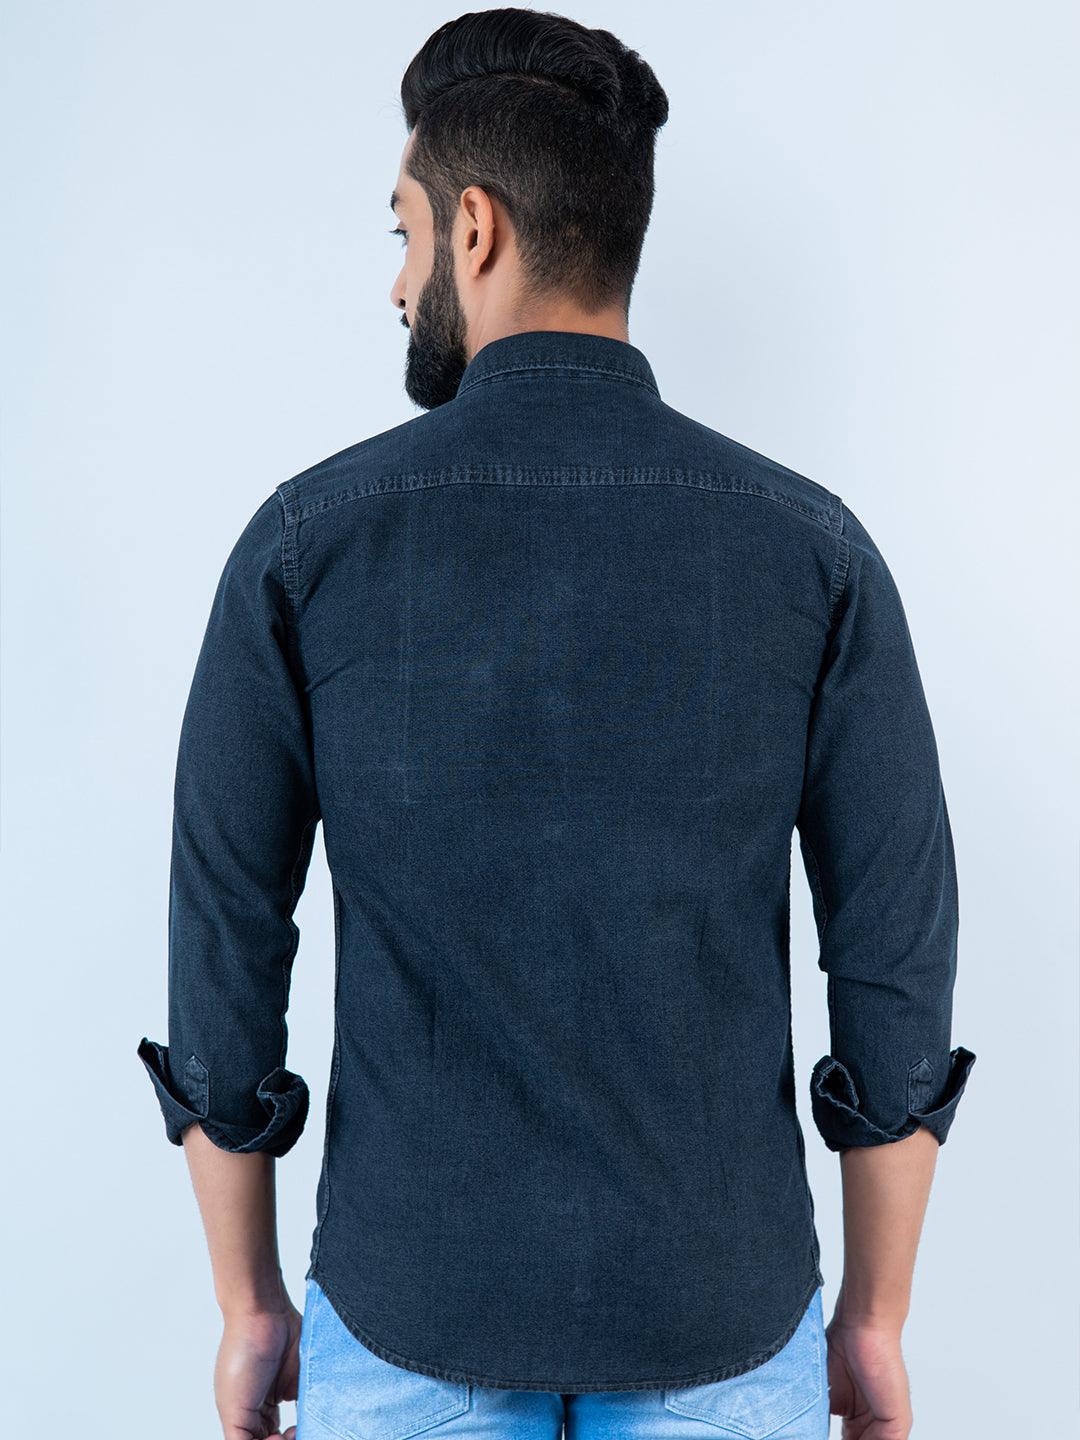 Men's Denim Shirts - Jean Button Down Shirts for Men - Express